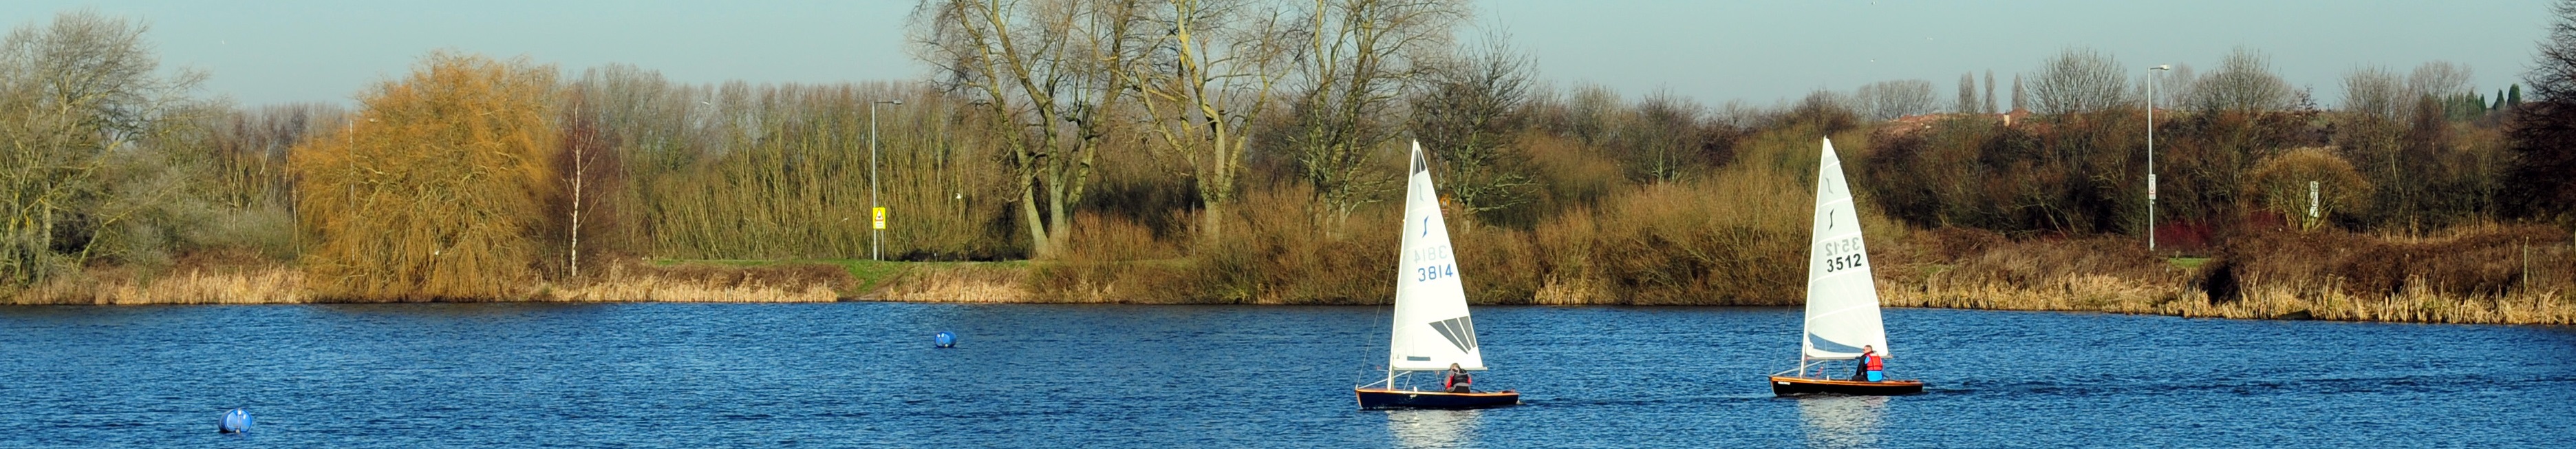 Photo of boats sailing on a lake at Aldridge Sailing Club